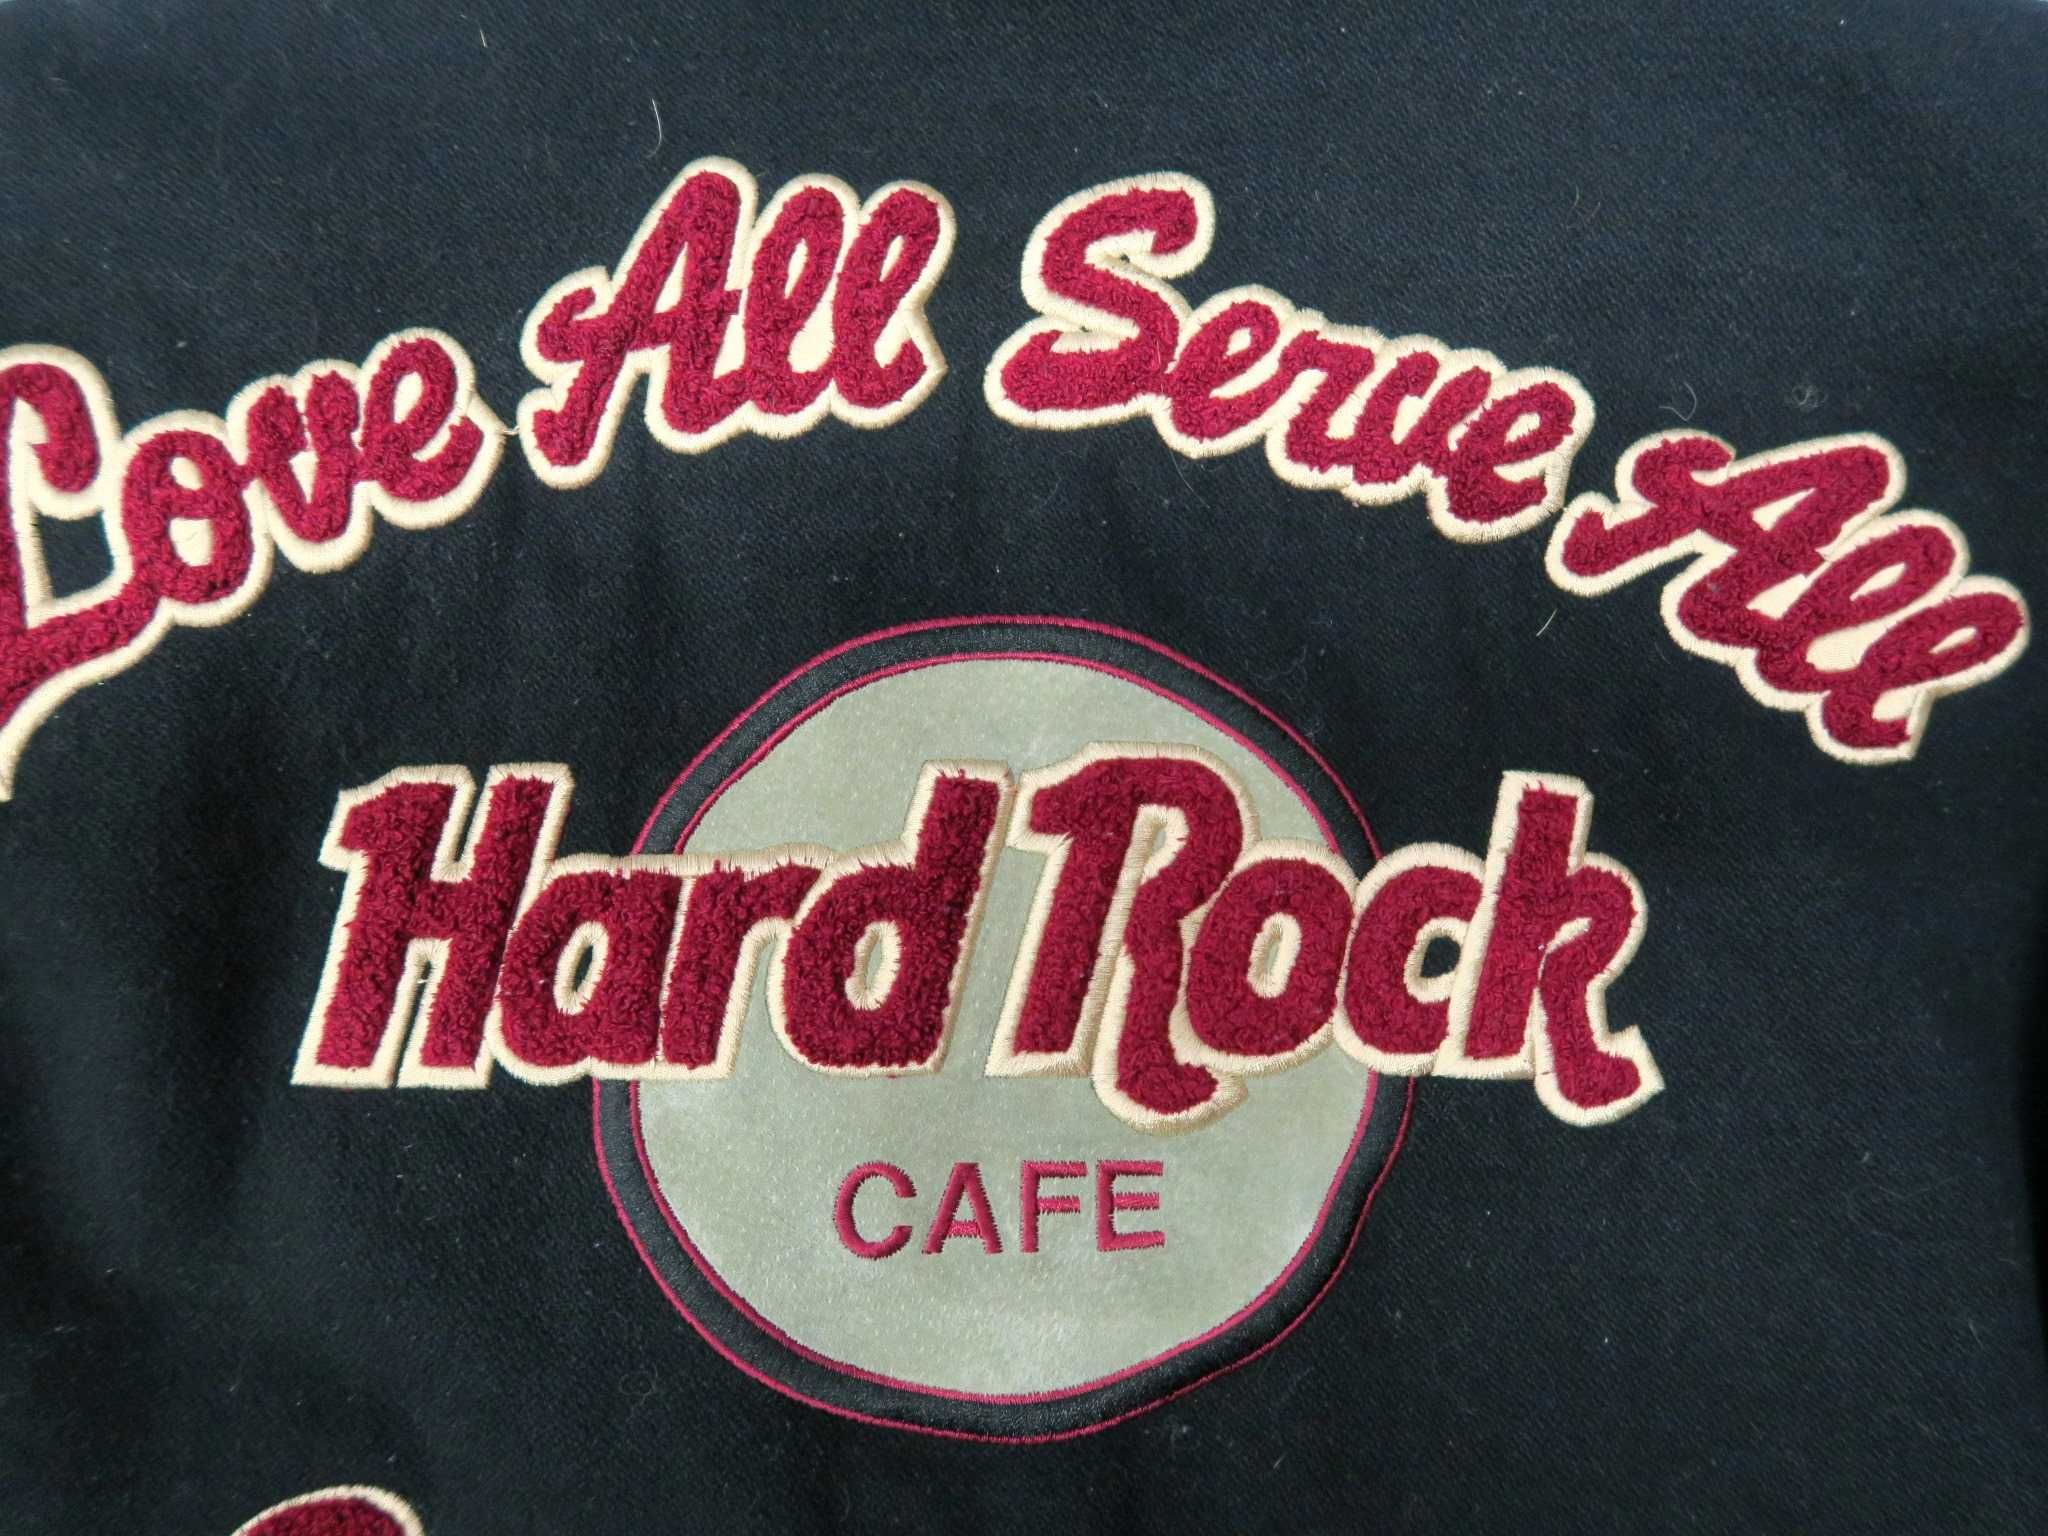 Hard Rock Cafe Cleveland kurtka bomberka S vintage